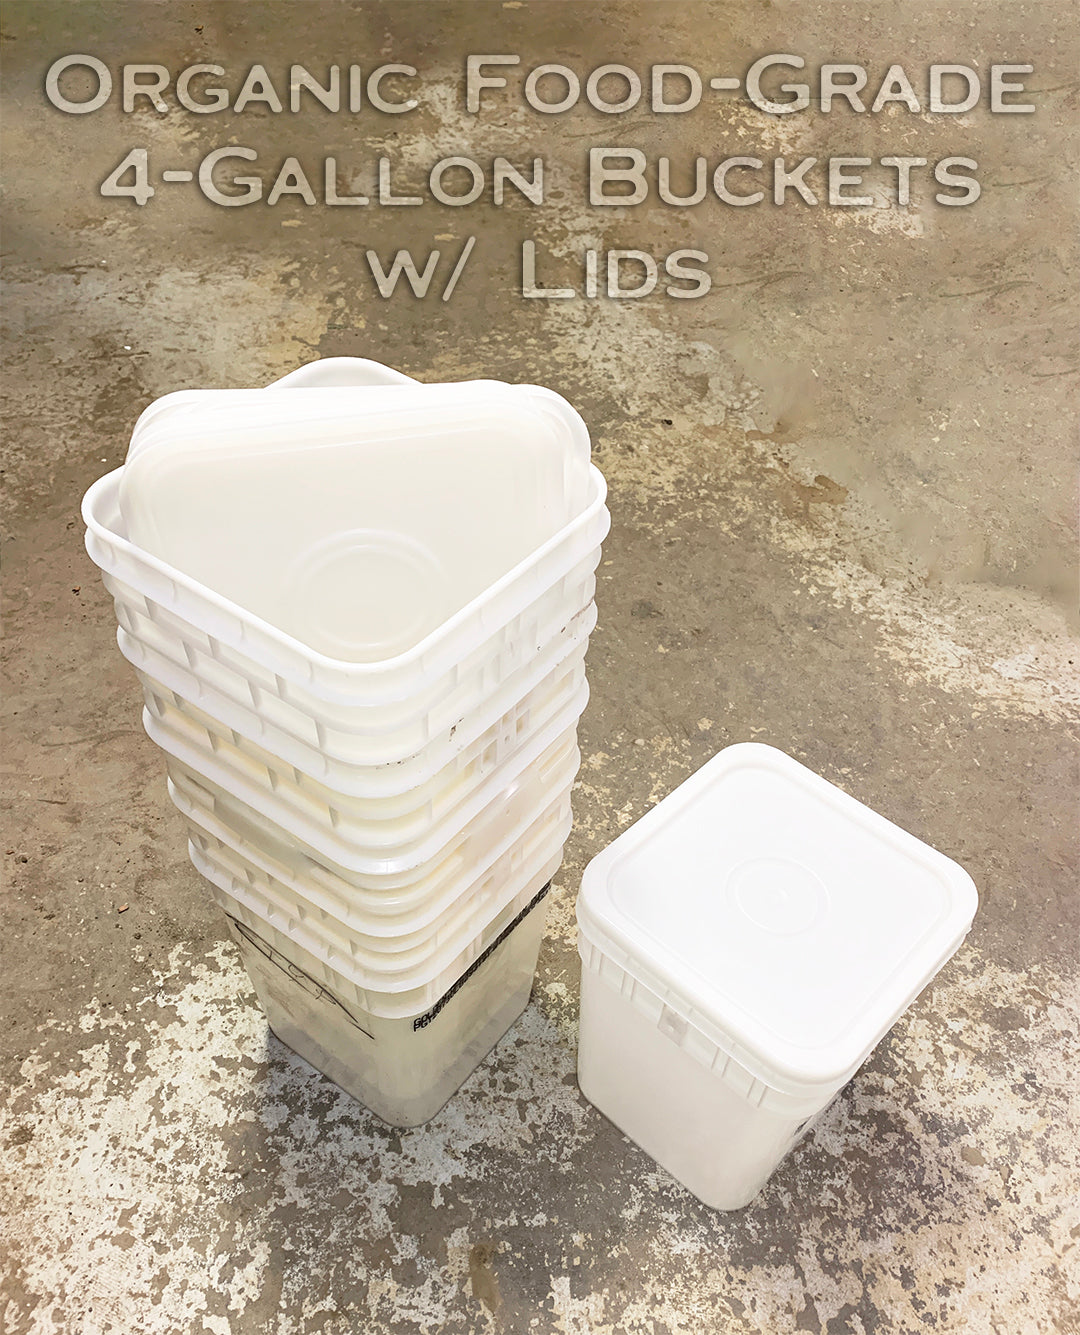 10) Organic Food-Grade 4-Gallon Square Buckets w/ Lids